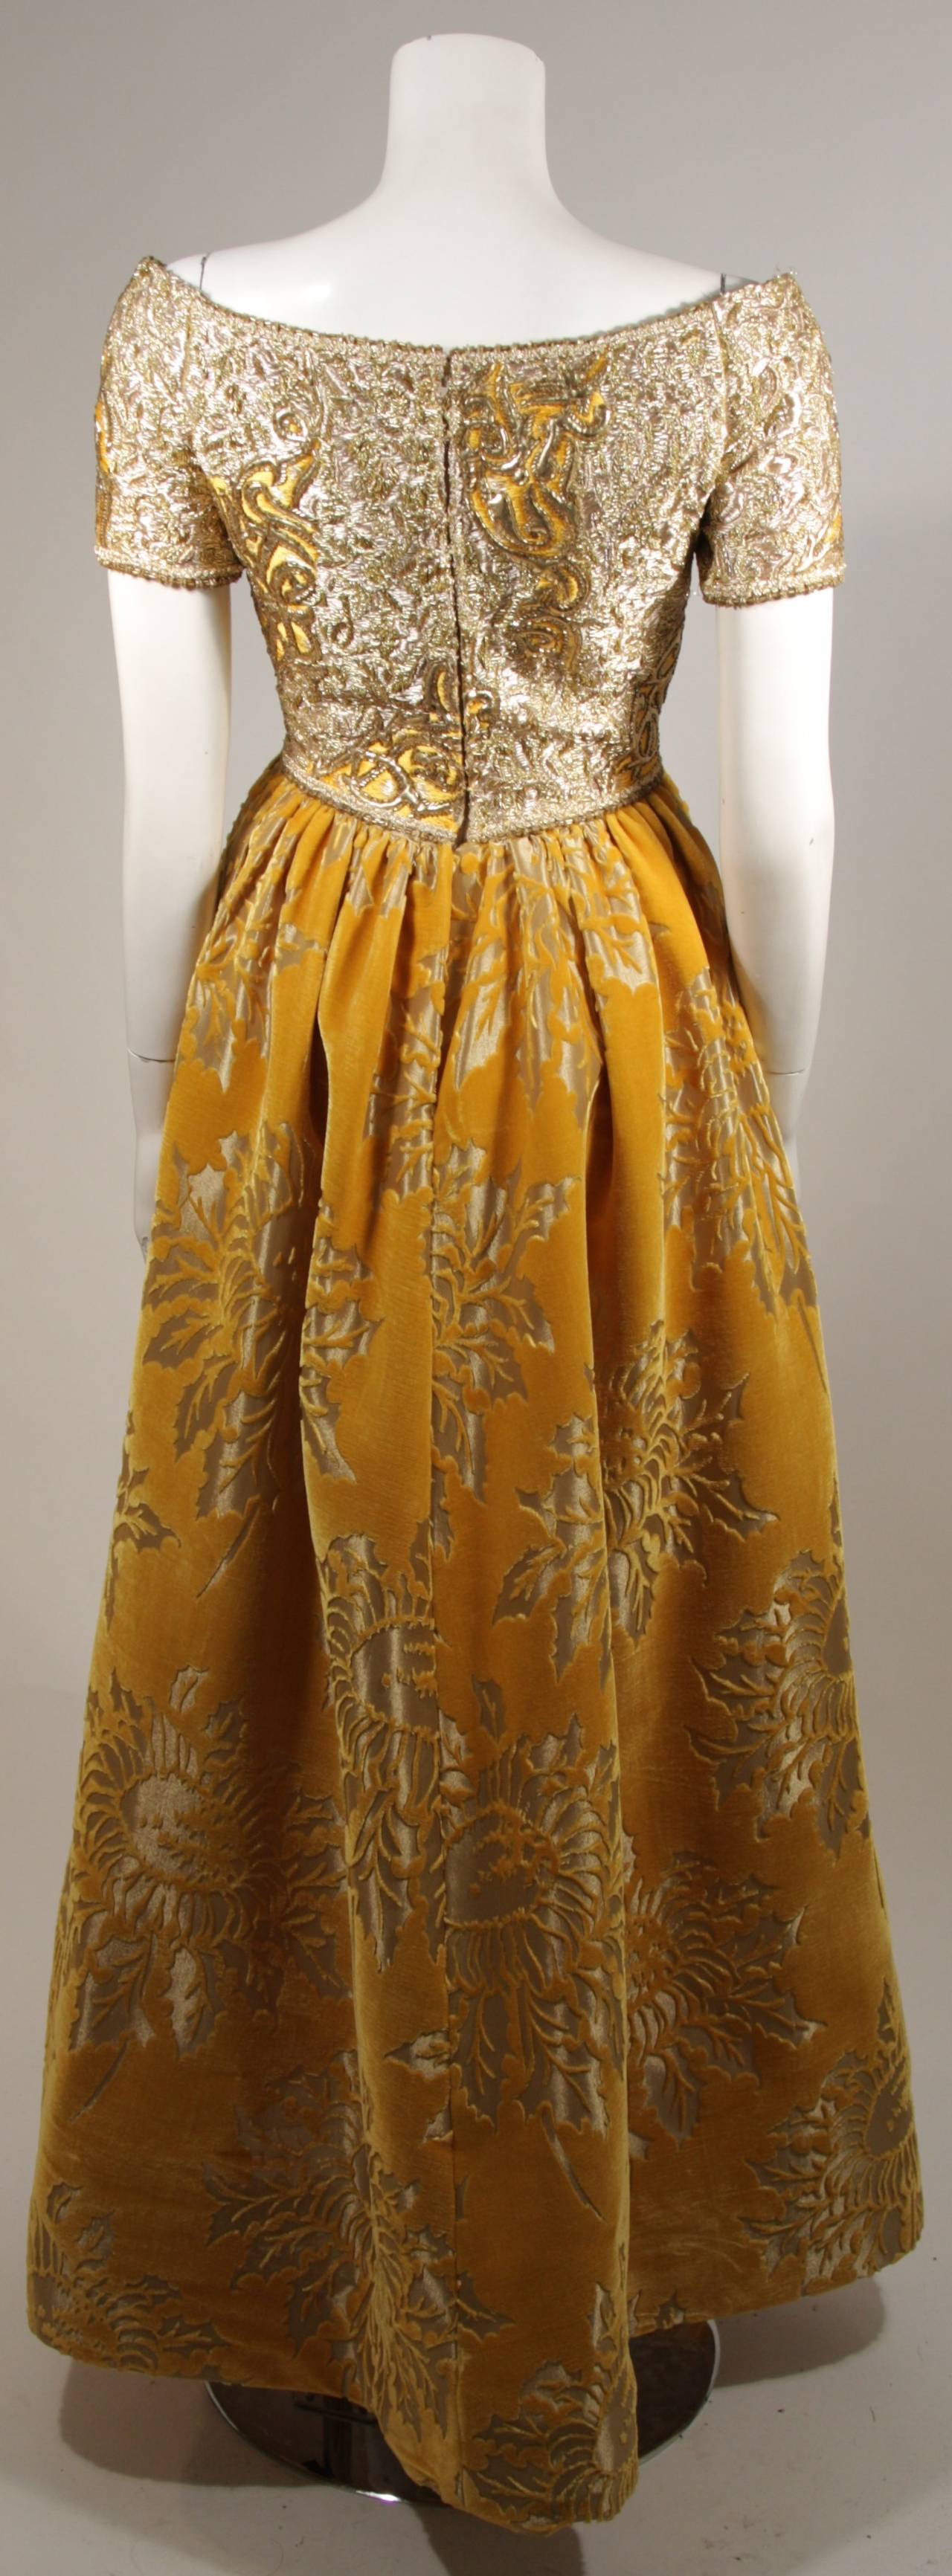 Oscar De La Renta Couture Attributed Brocade and Velvet Gown Size 2 4 3